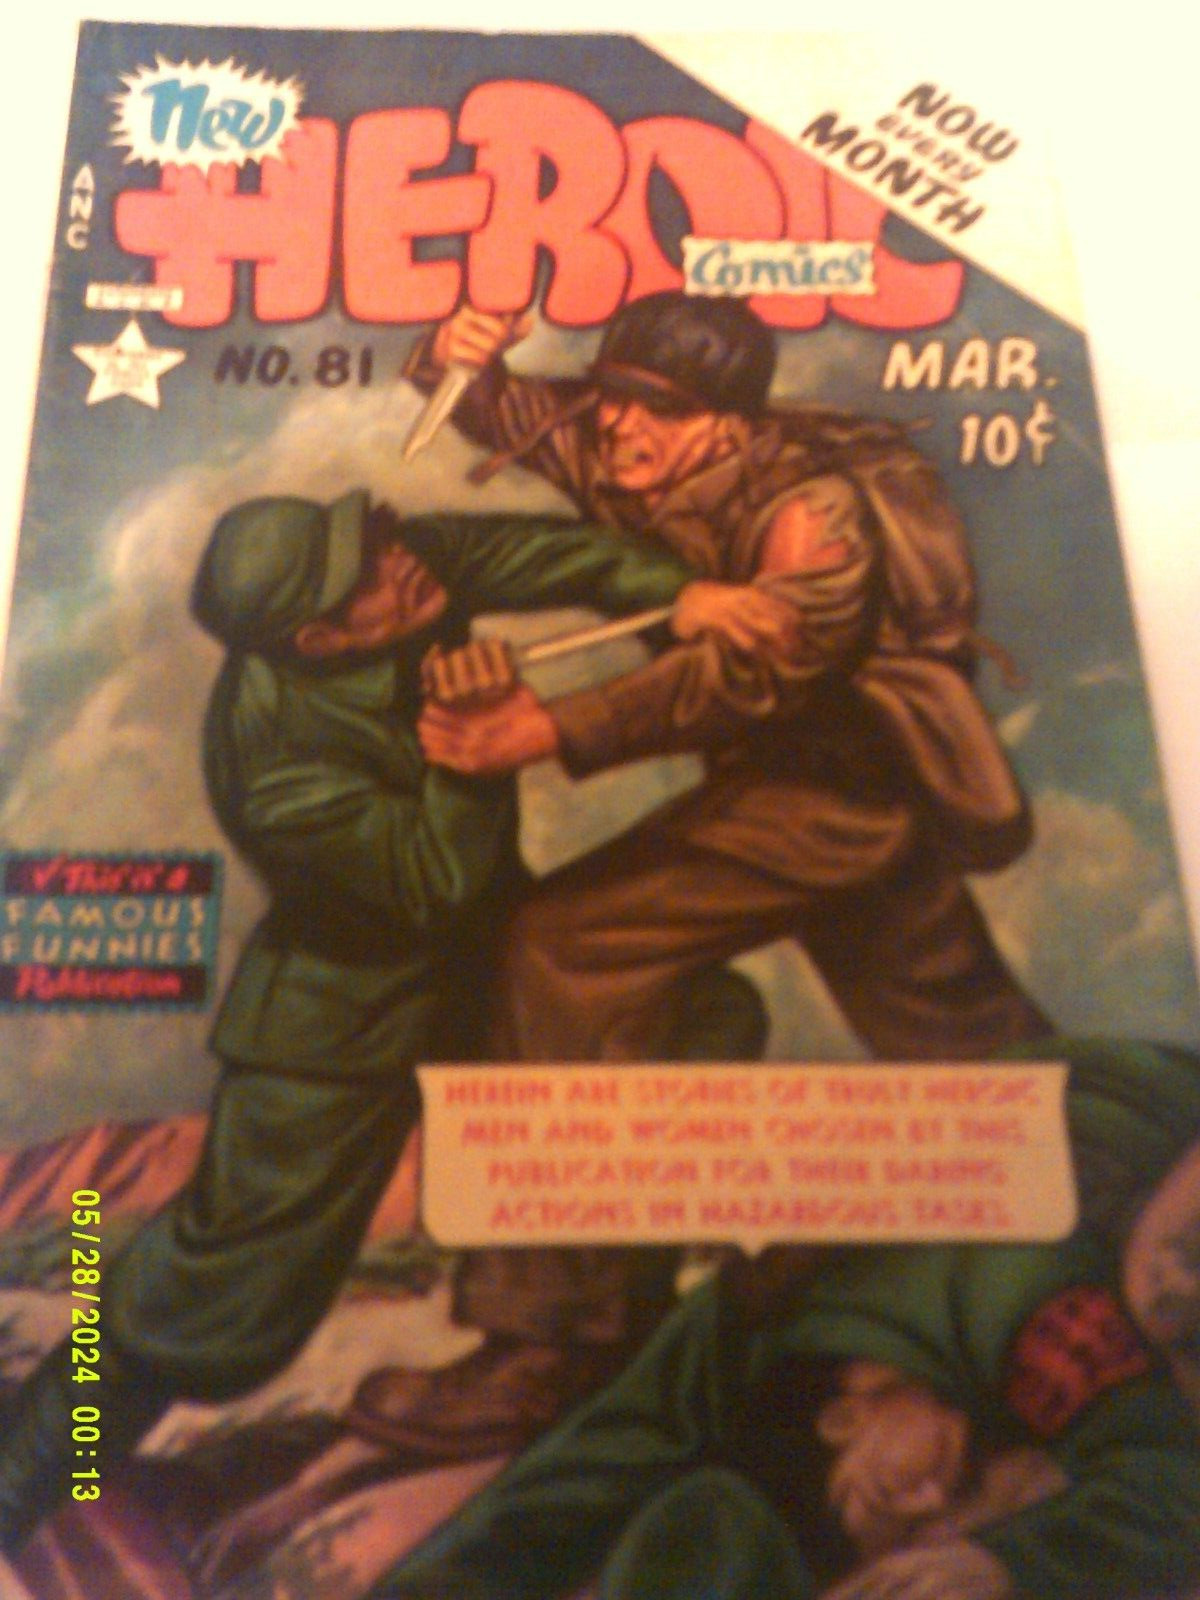 New Heroic Comics #81 FRAZETTA Art Golden Age Comic 1952